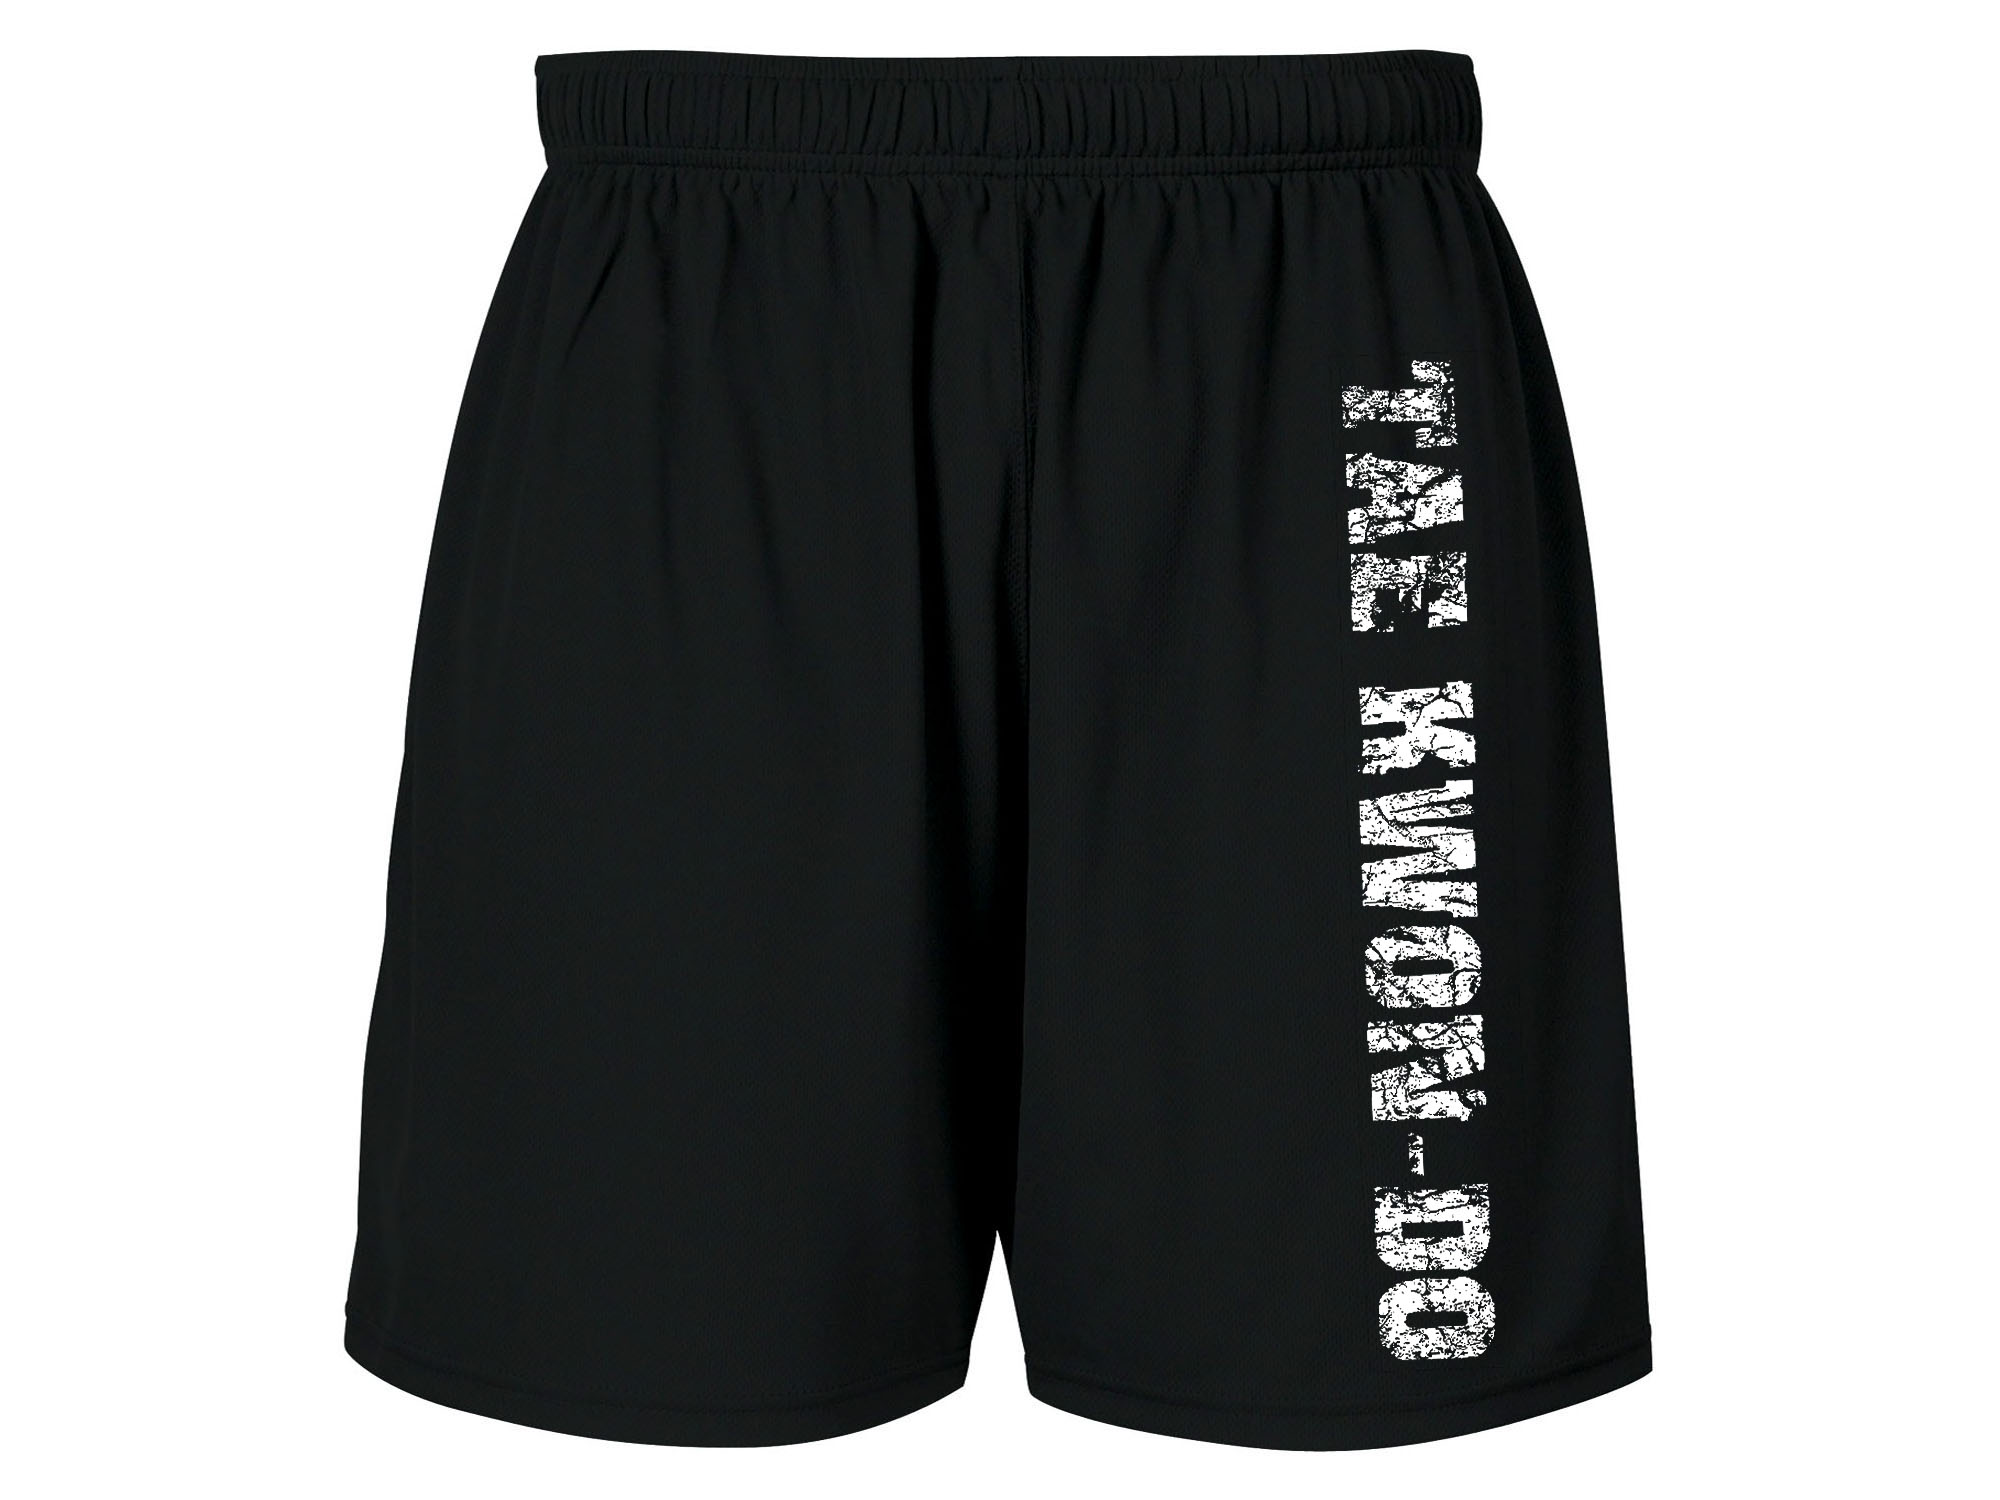 Taekwondo distressed print MMA moisture wicking polyester black shorts